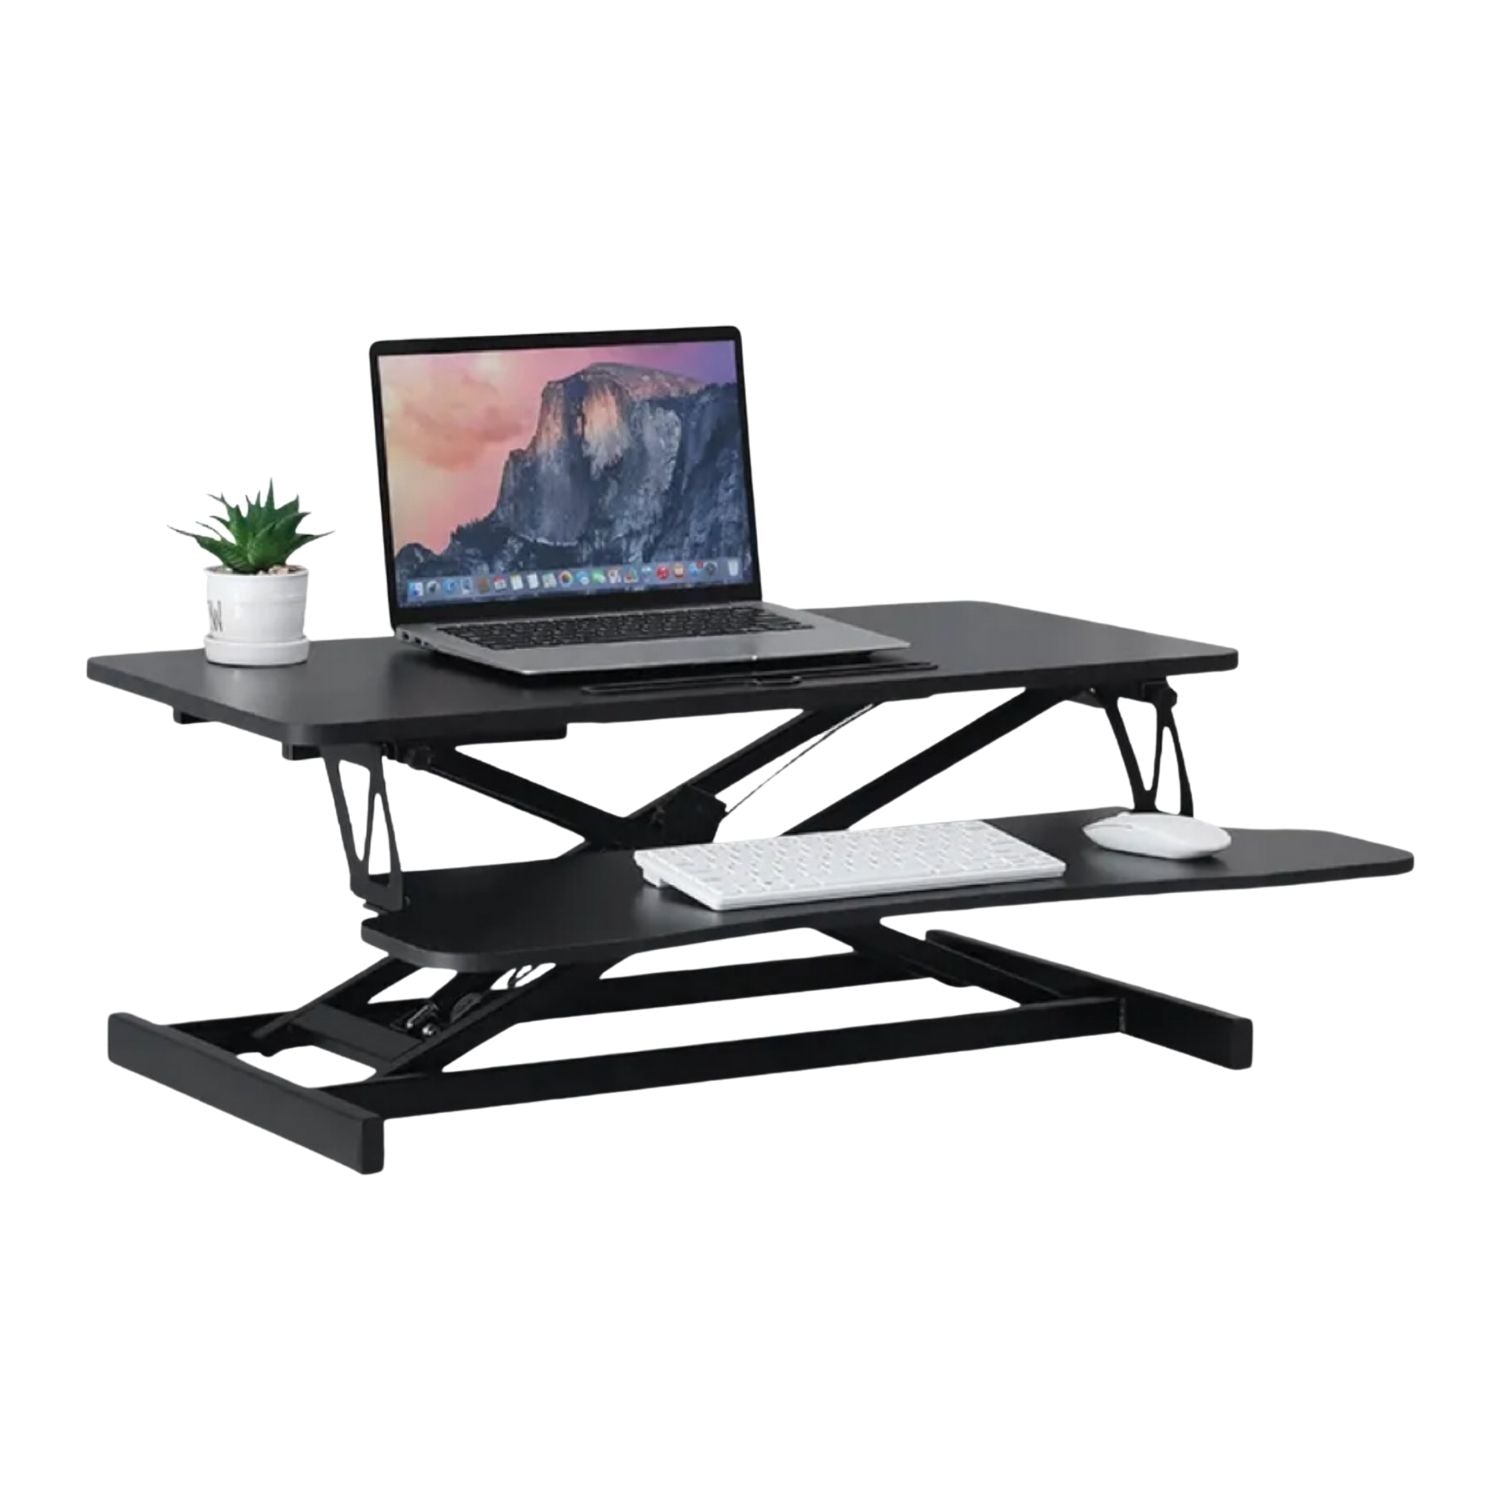 EKKIO Adjustable Standing Desk Riser with Gas Spring (Black)